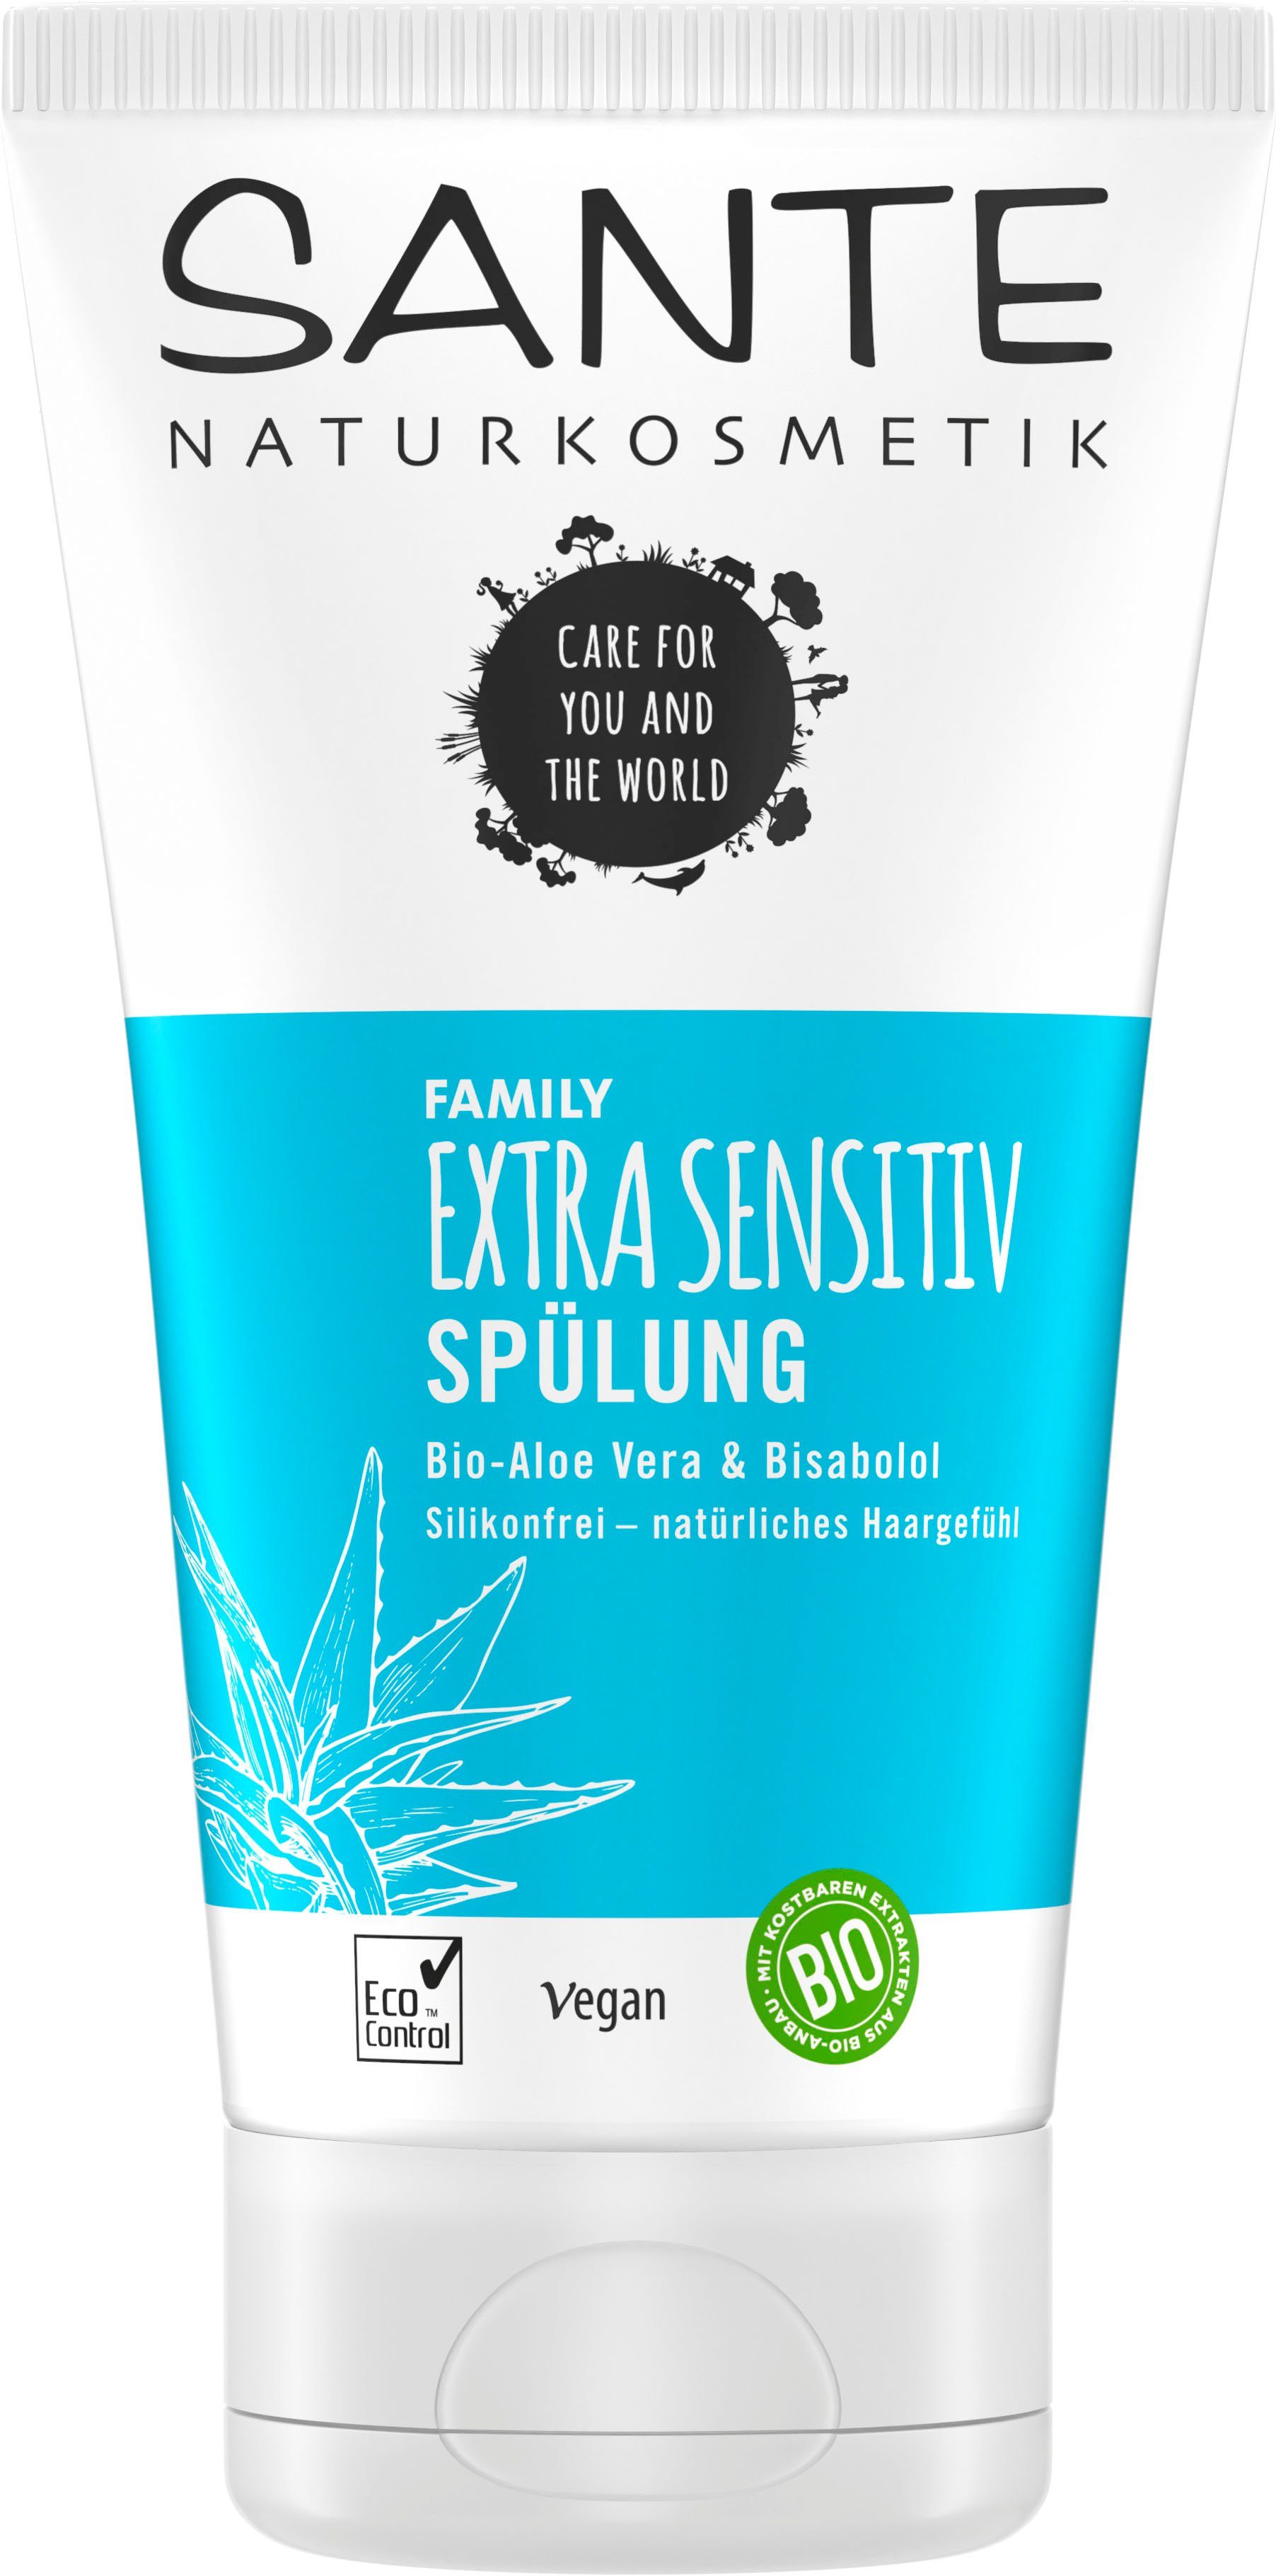 SANTE Spülung Sensitiv FAMILY Extra Haarspülung